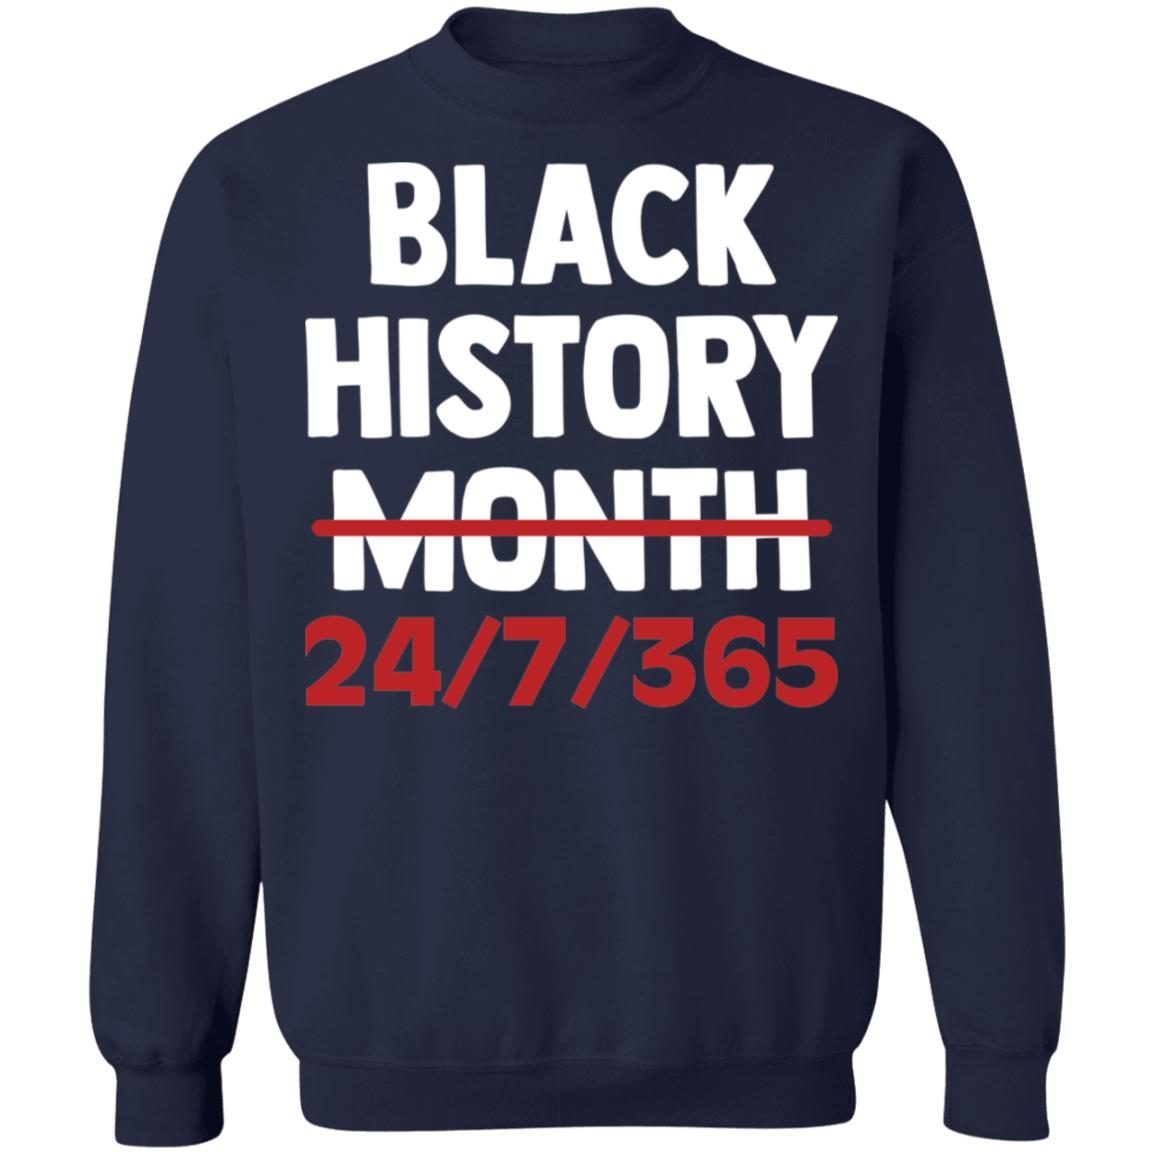 Black history month 24/7/365 shirt 5